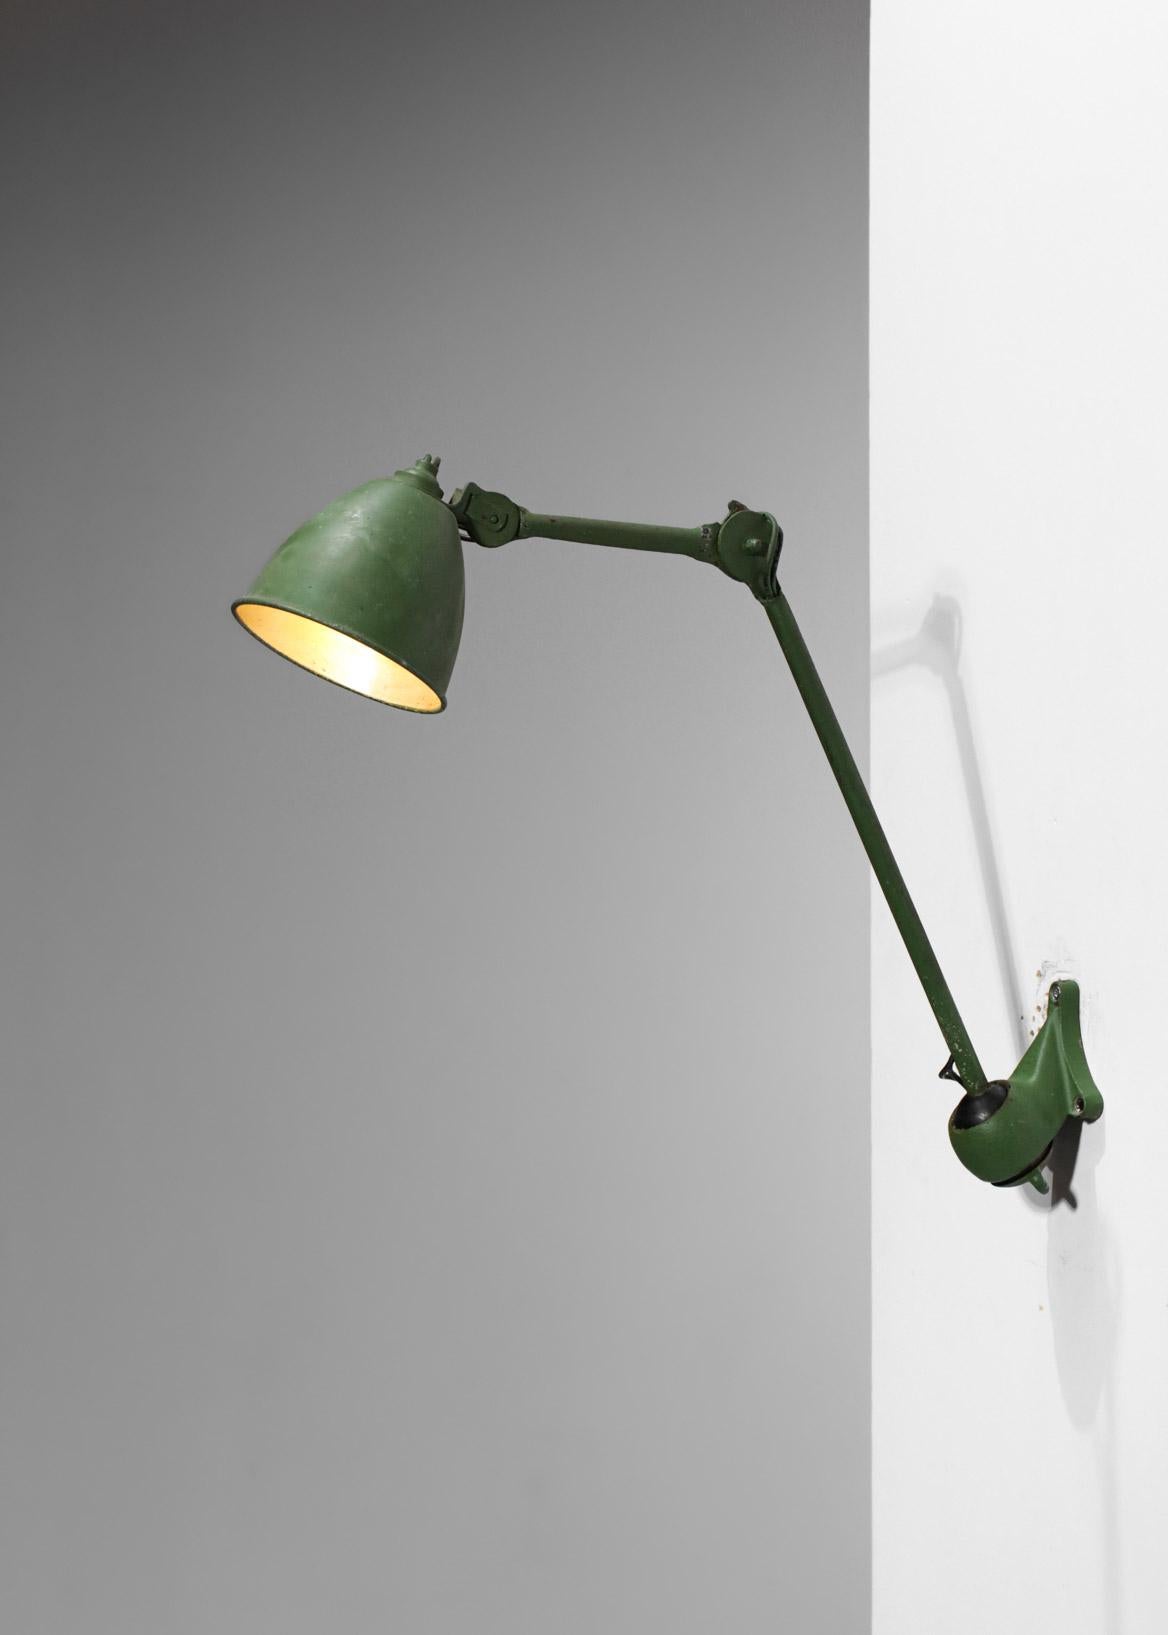 Albert Albin Gras Workshop Lamp Metal Lacquered Le Corbusier Ravel Sconce, G345 For Sale 5